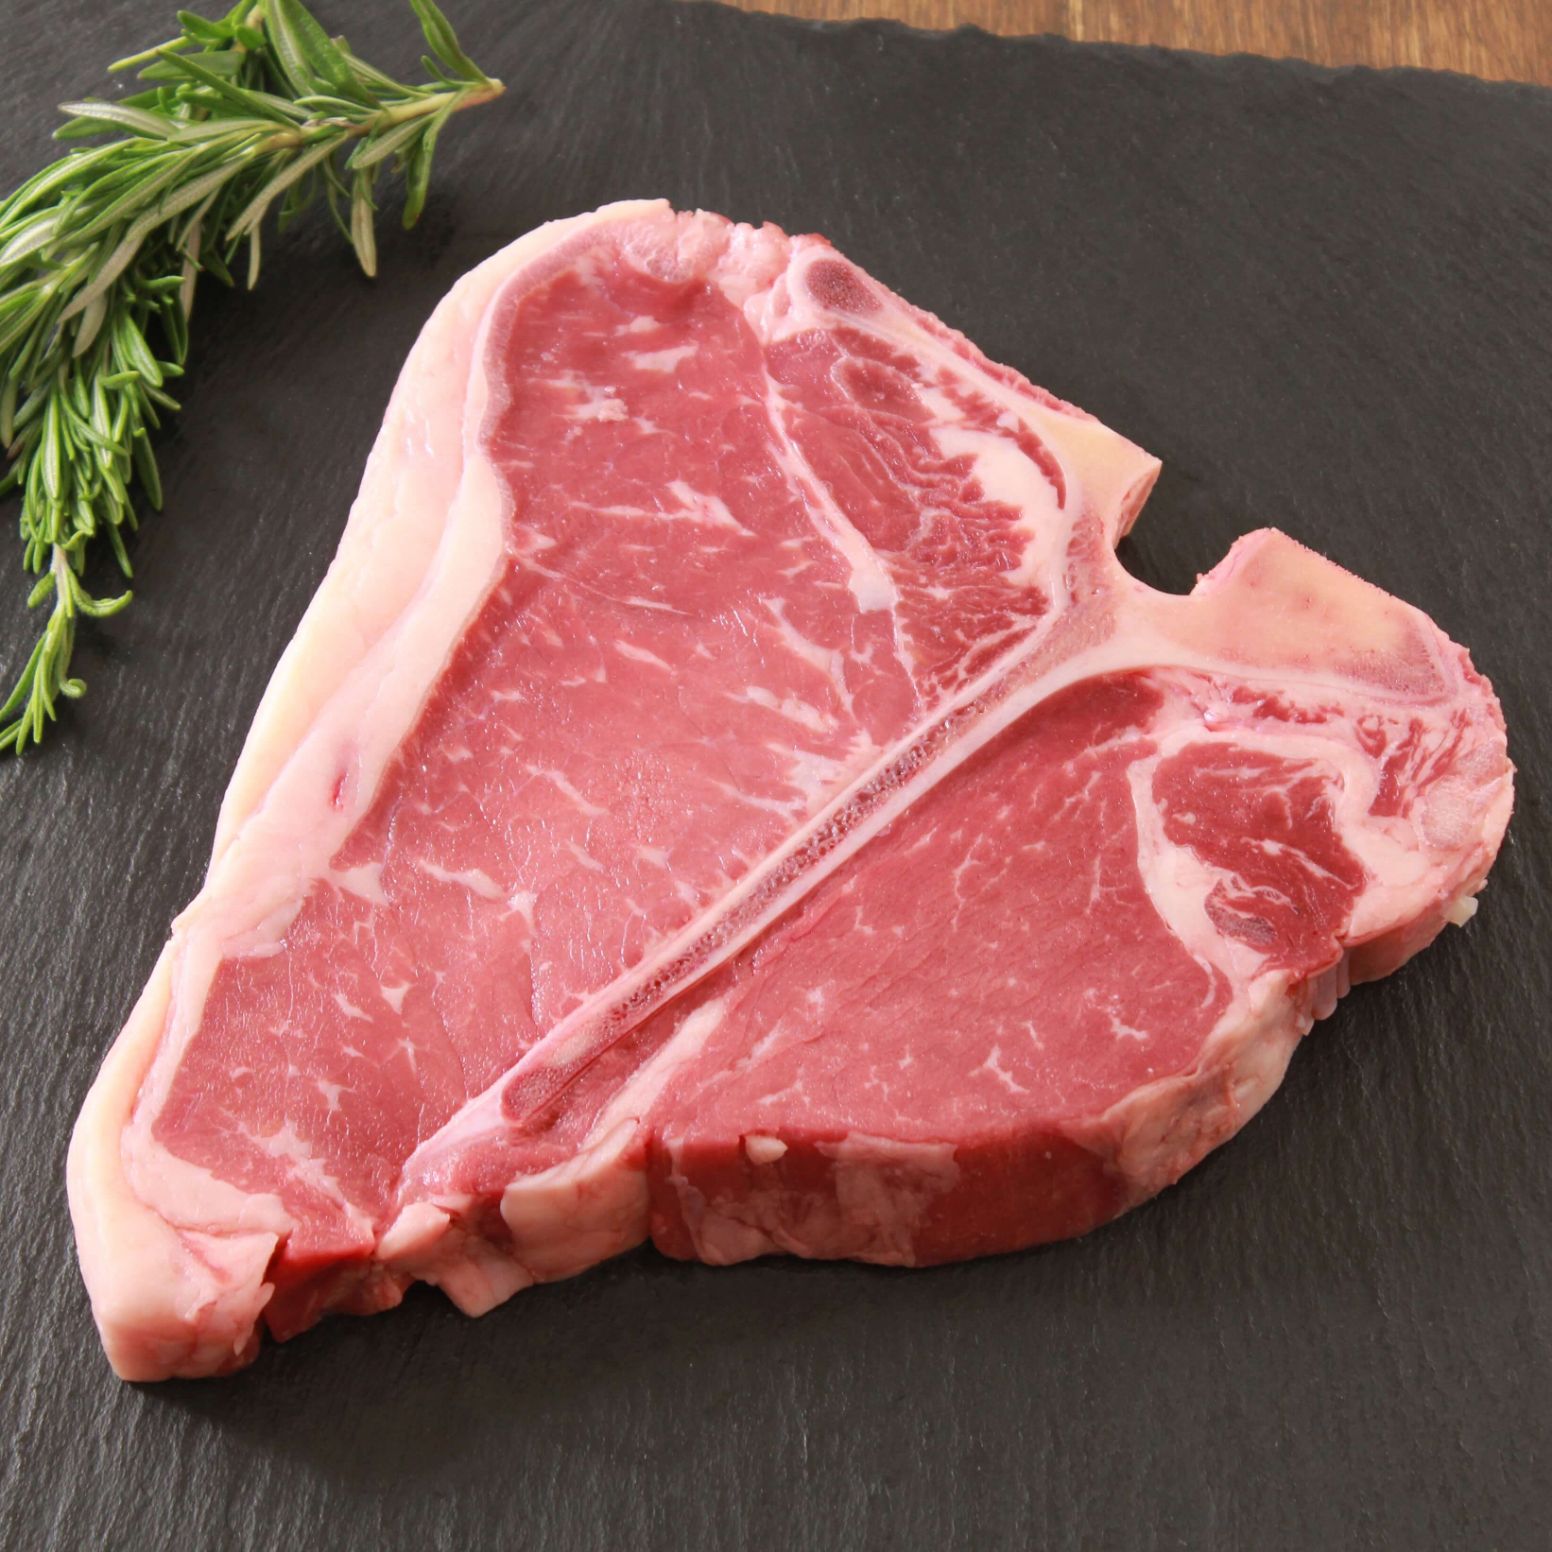 Tーボーンステーキ 骨付き牛肉 ビーフ 牛肉ステーキ 500g T-Bone Steak (WHOLE MEAT) SKU111